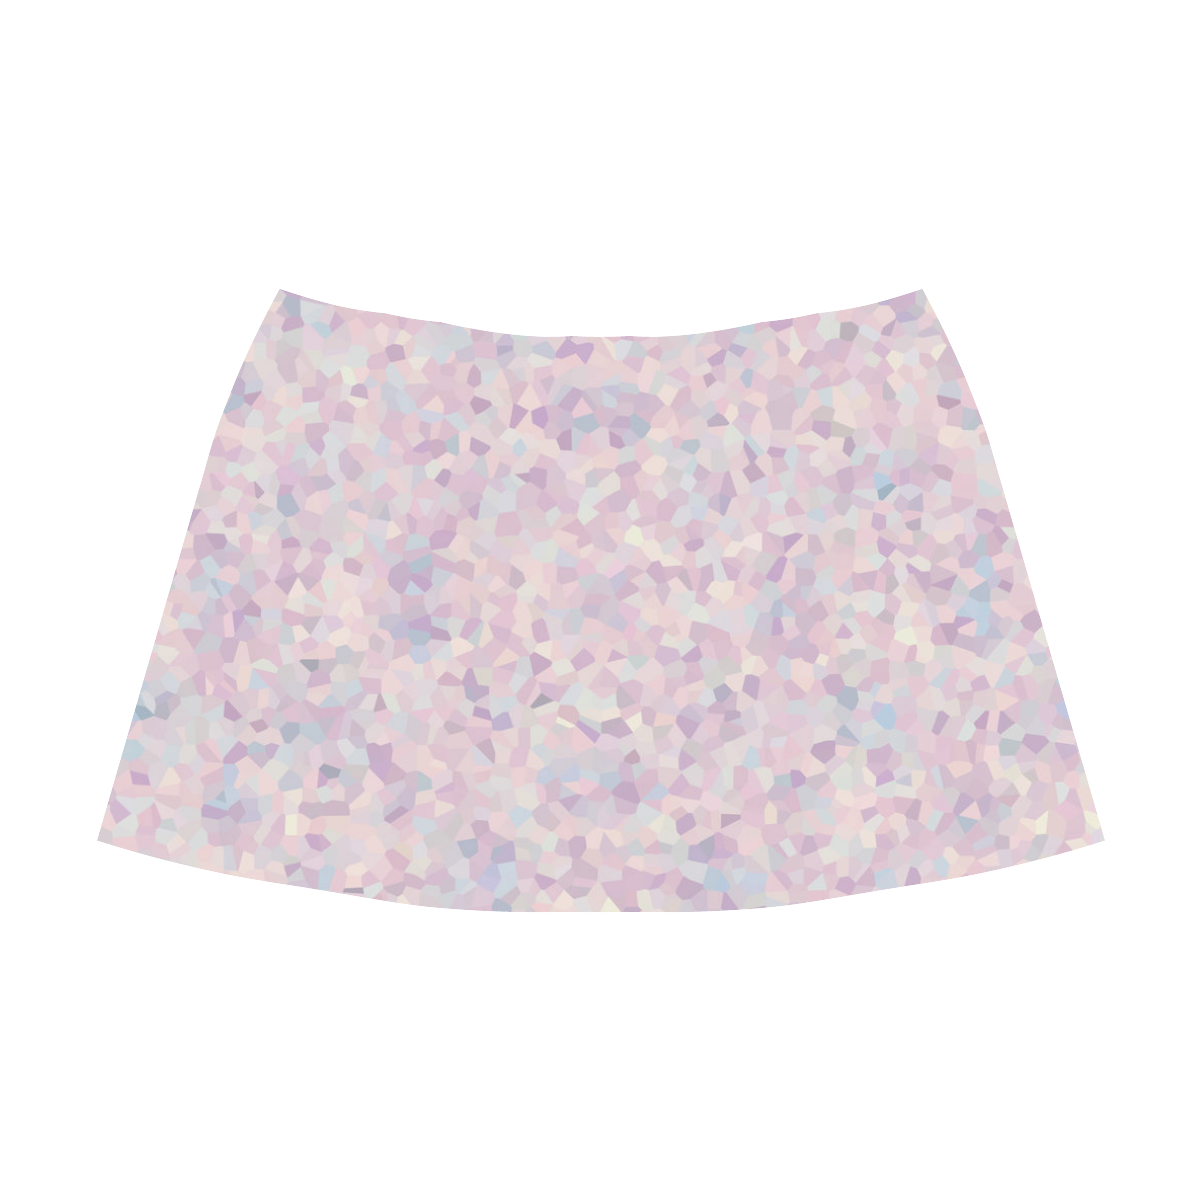 lavender & lilac pattern Mnemosyne Women's Crepe Skirt (Model D16)